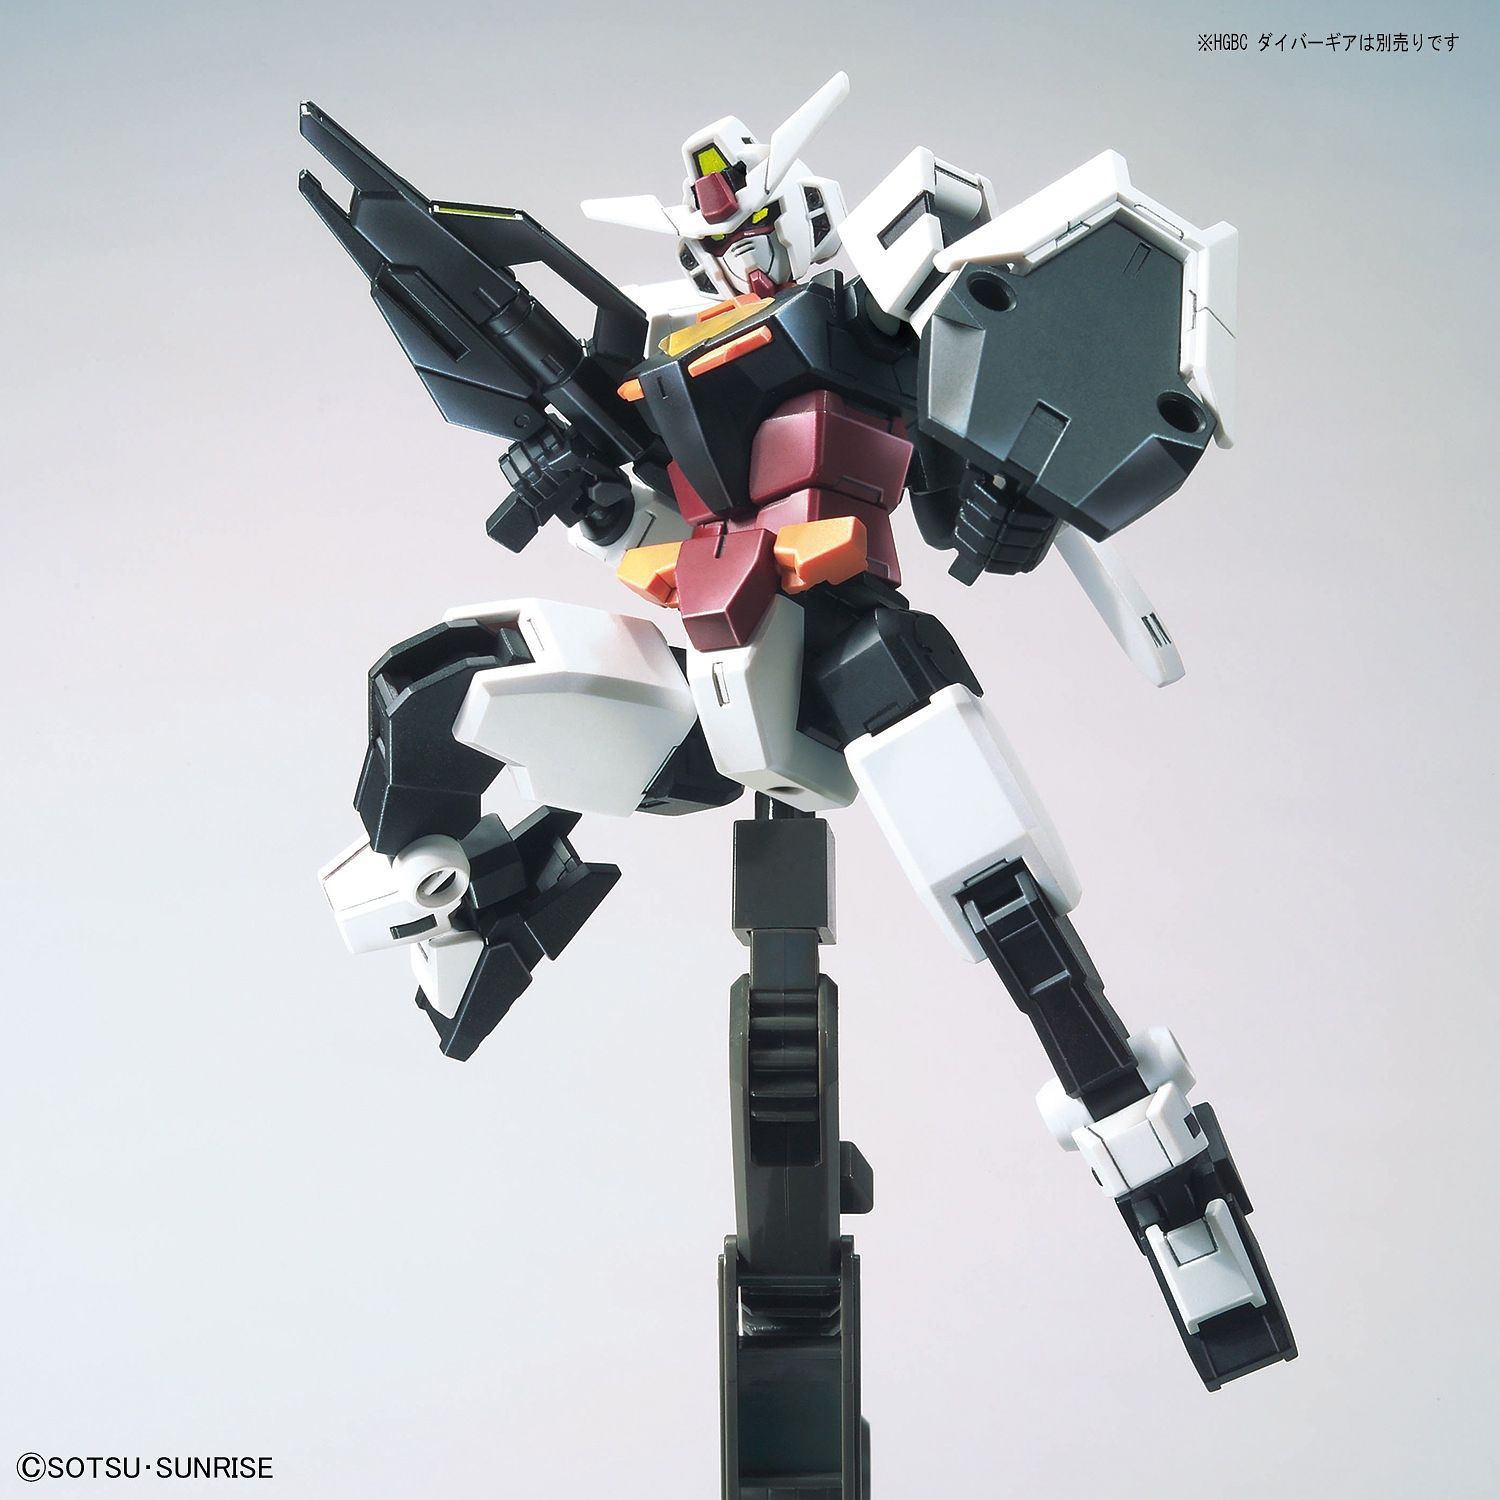 HG Gundam Core (Real Type Color) & Marsfour Unit 1/144 - gundam-store.dk